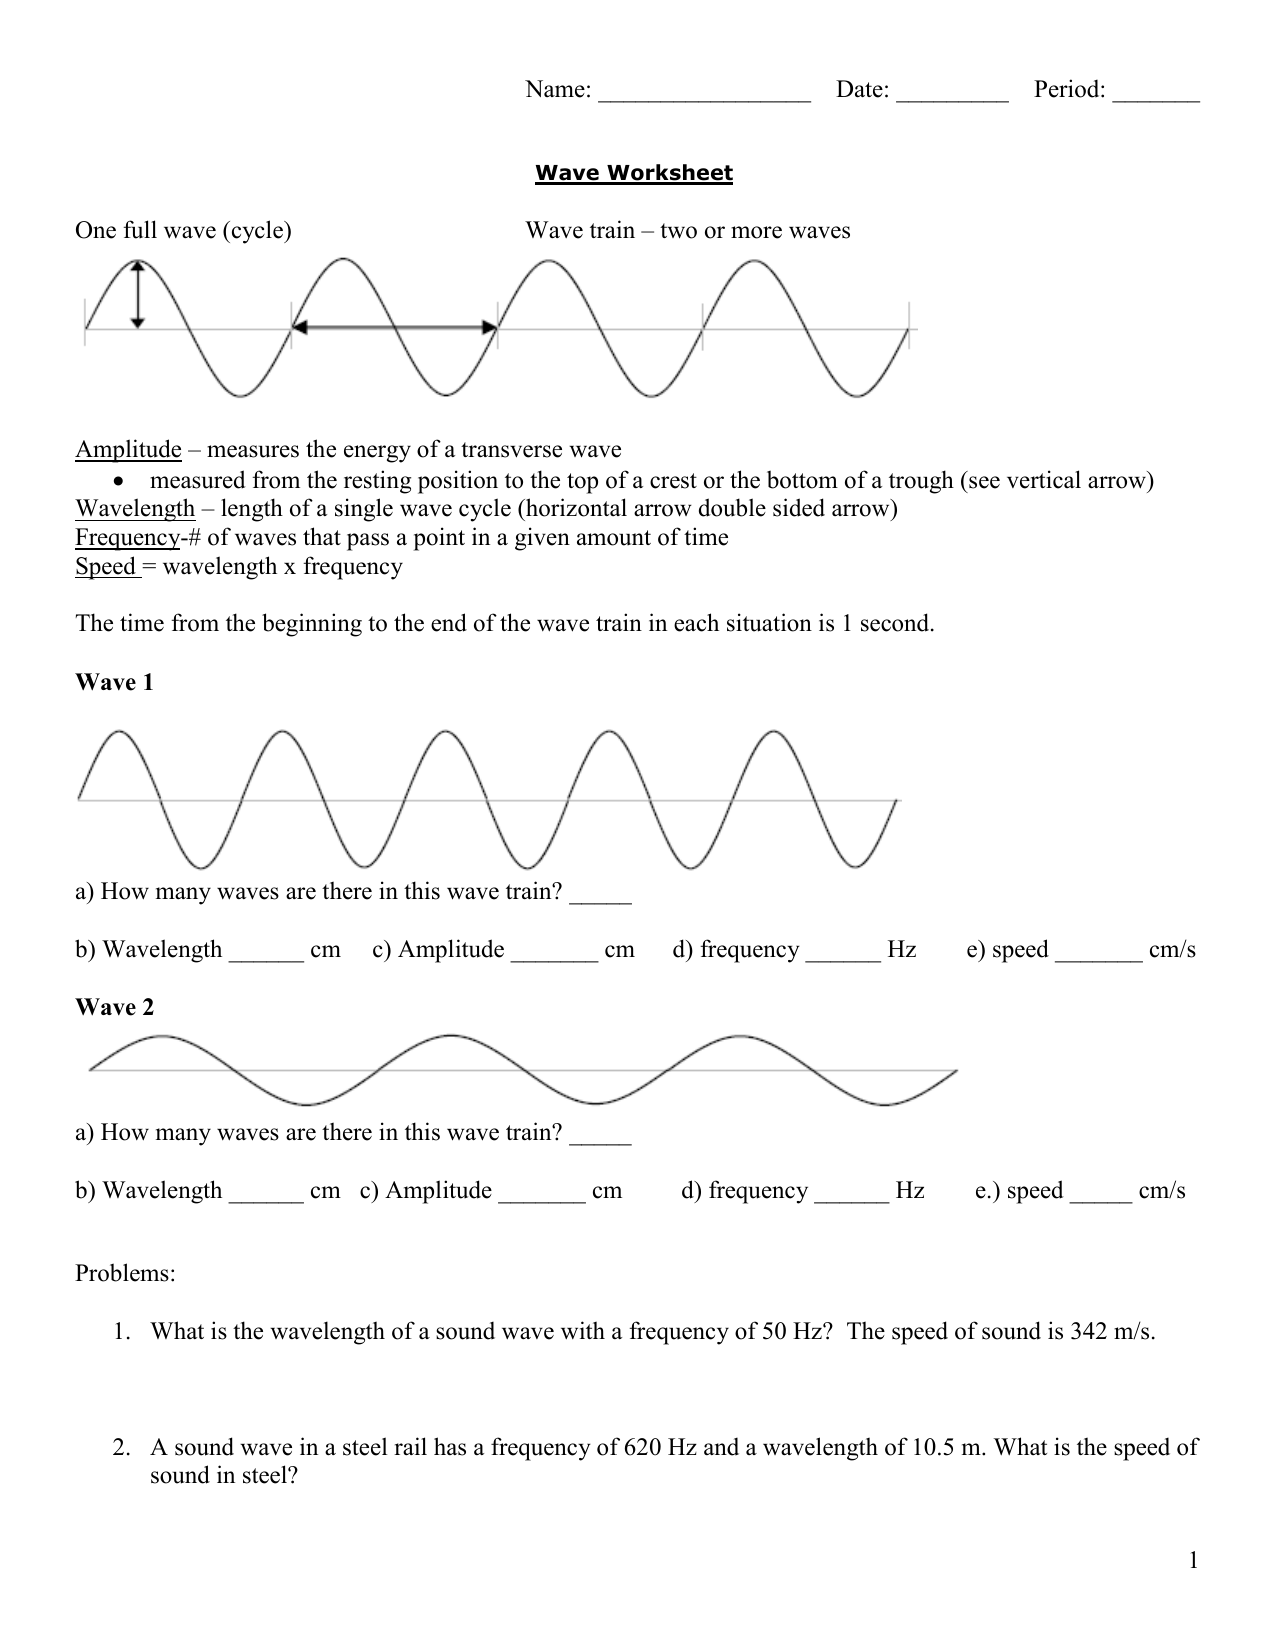 Wave Worksheet In Waves Worksheet Answer Key